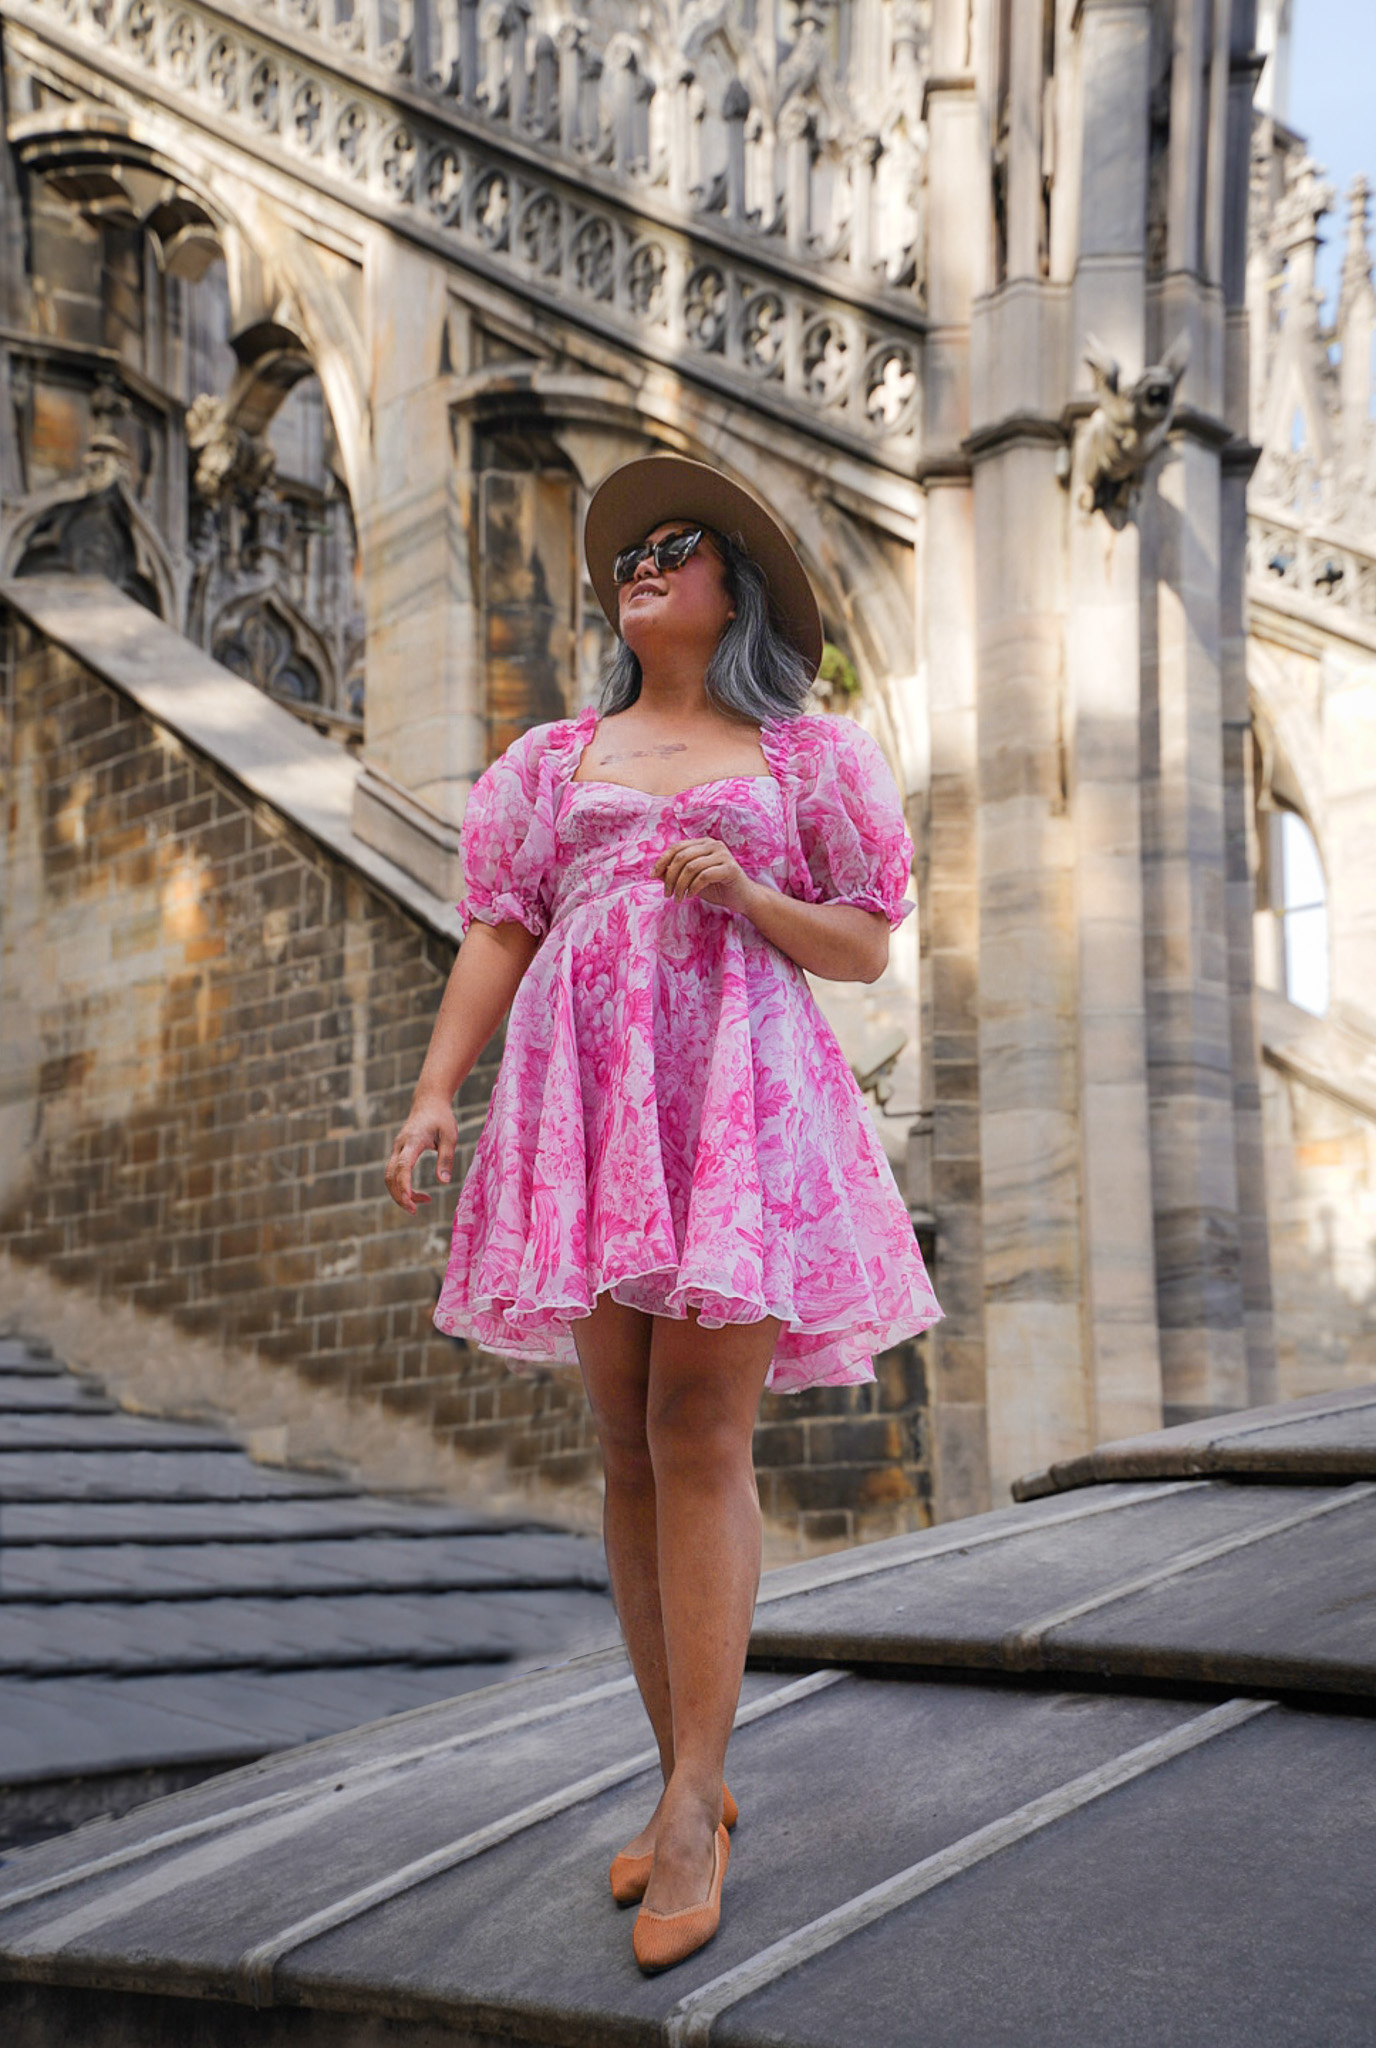 Milan Dome Duomo di Milano Selkie Parliament Dress Pink Toile Gigi pip Wren Hat Rothys Fawn Points